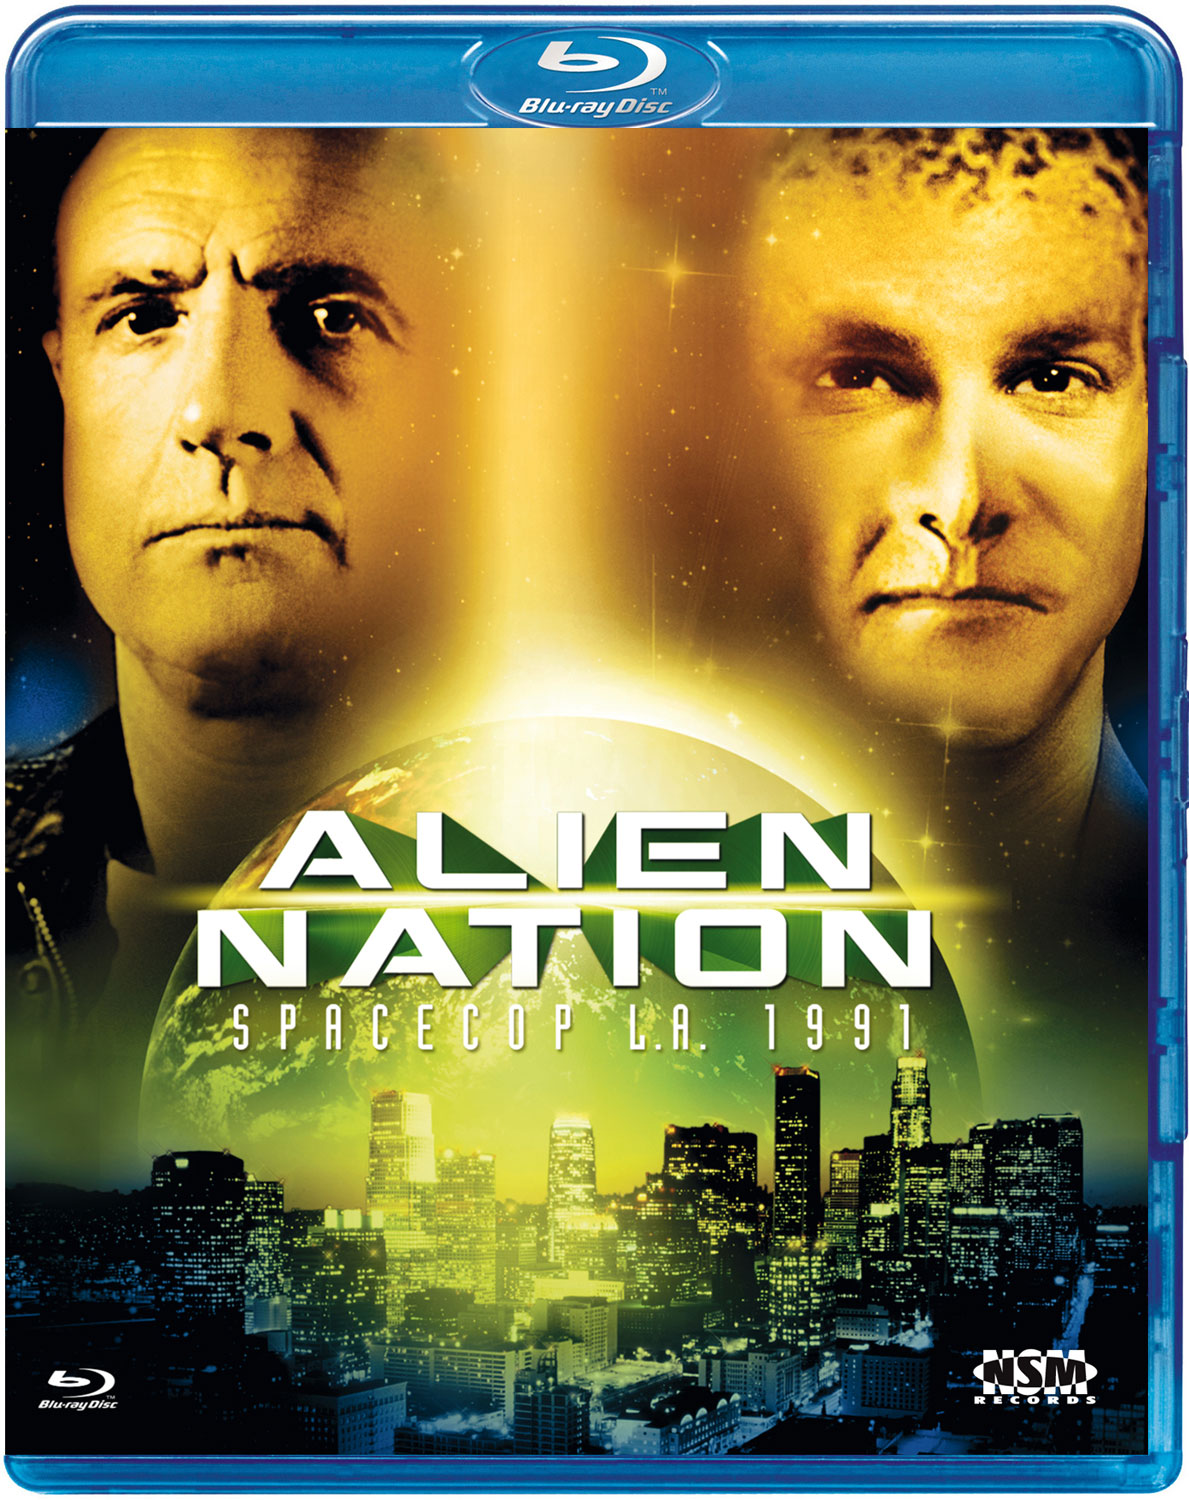 ALIEN NATION - SPACECOP L.A. 1991 (Blu-Ray) - Wendecover mit 2. Motiv